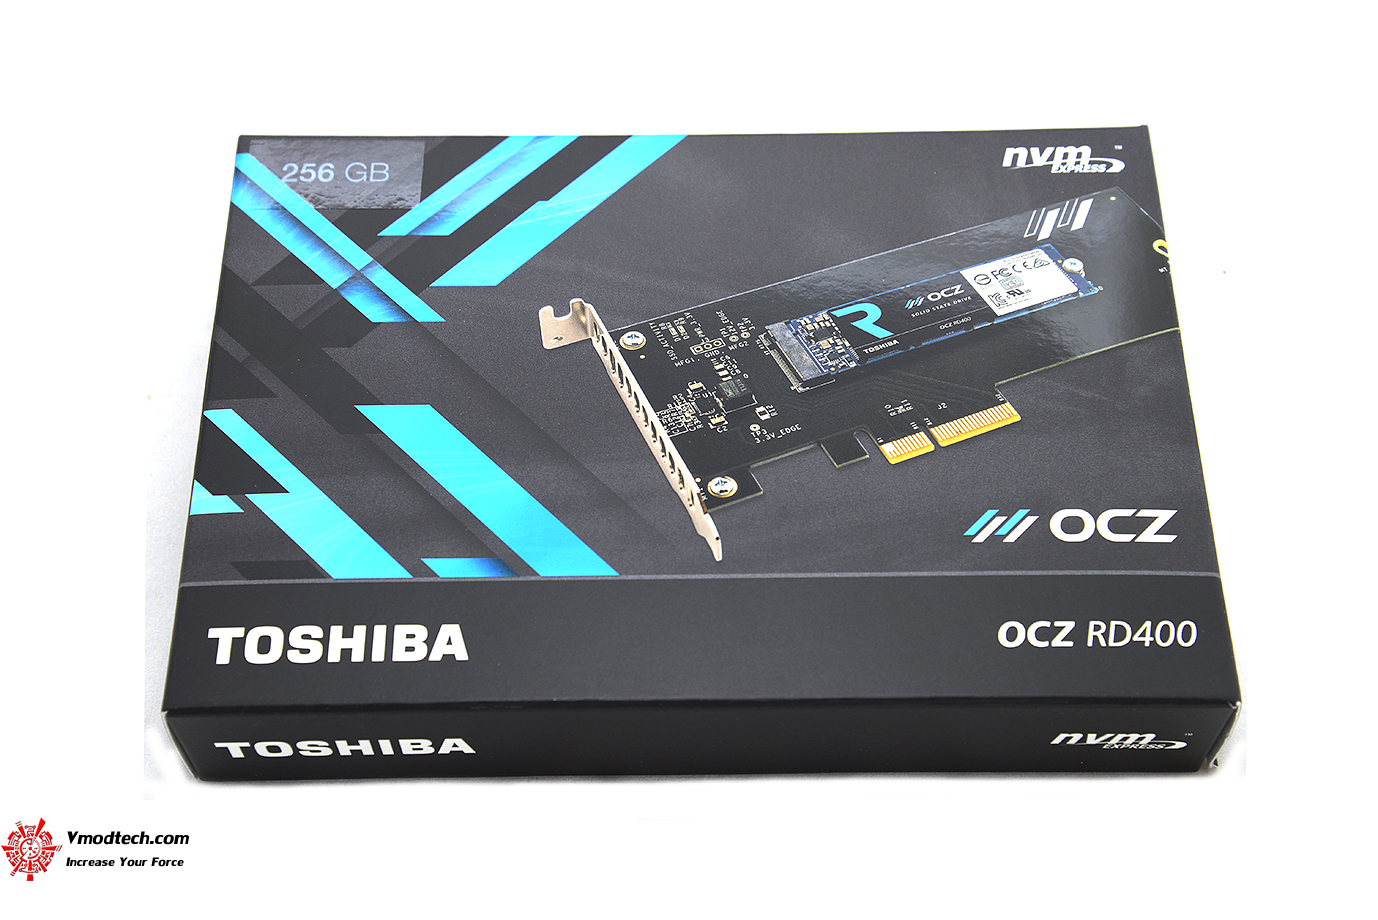 dsc 1804 Toshiba OCZ RD400 PCIe NVME SSD 256GB Review 